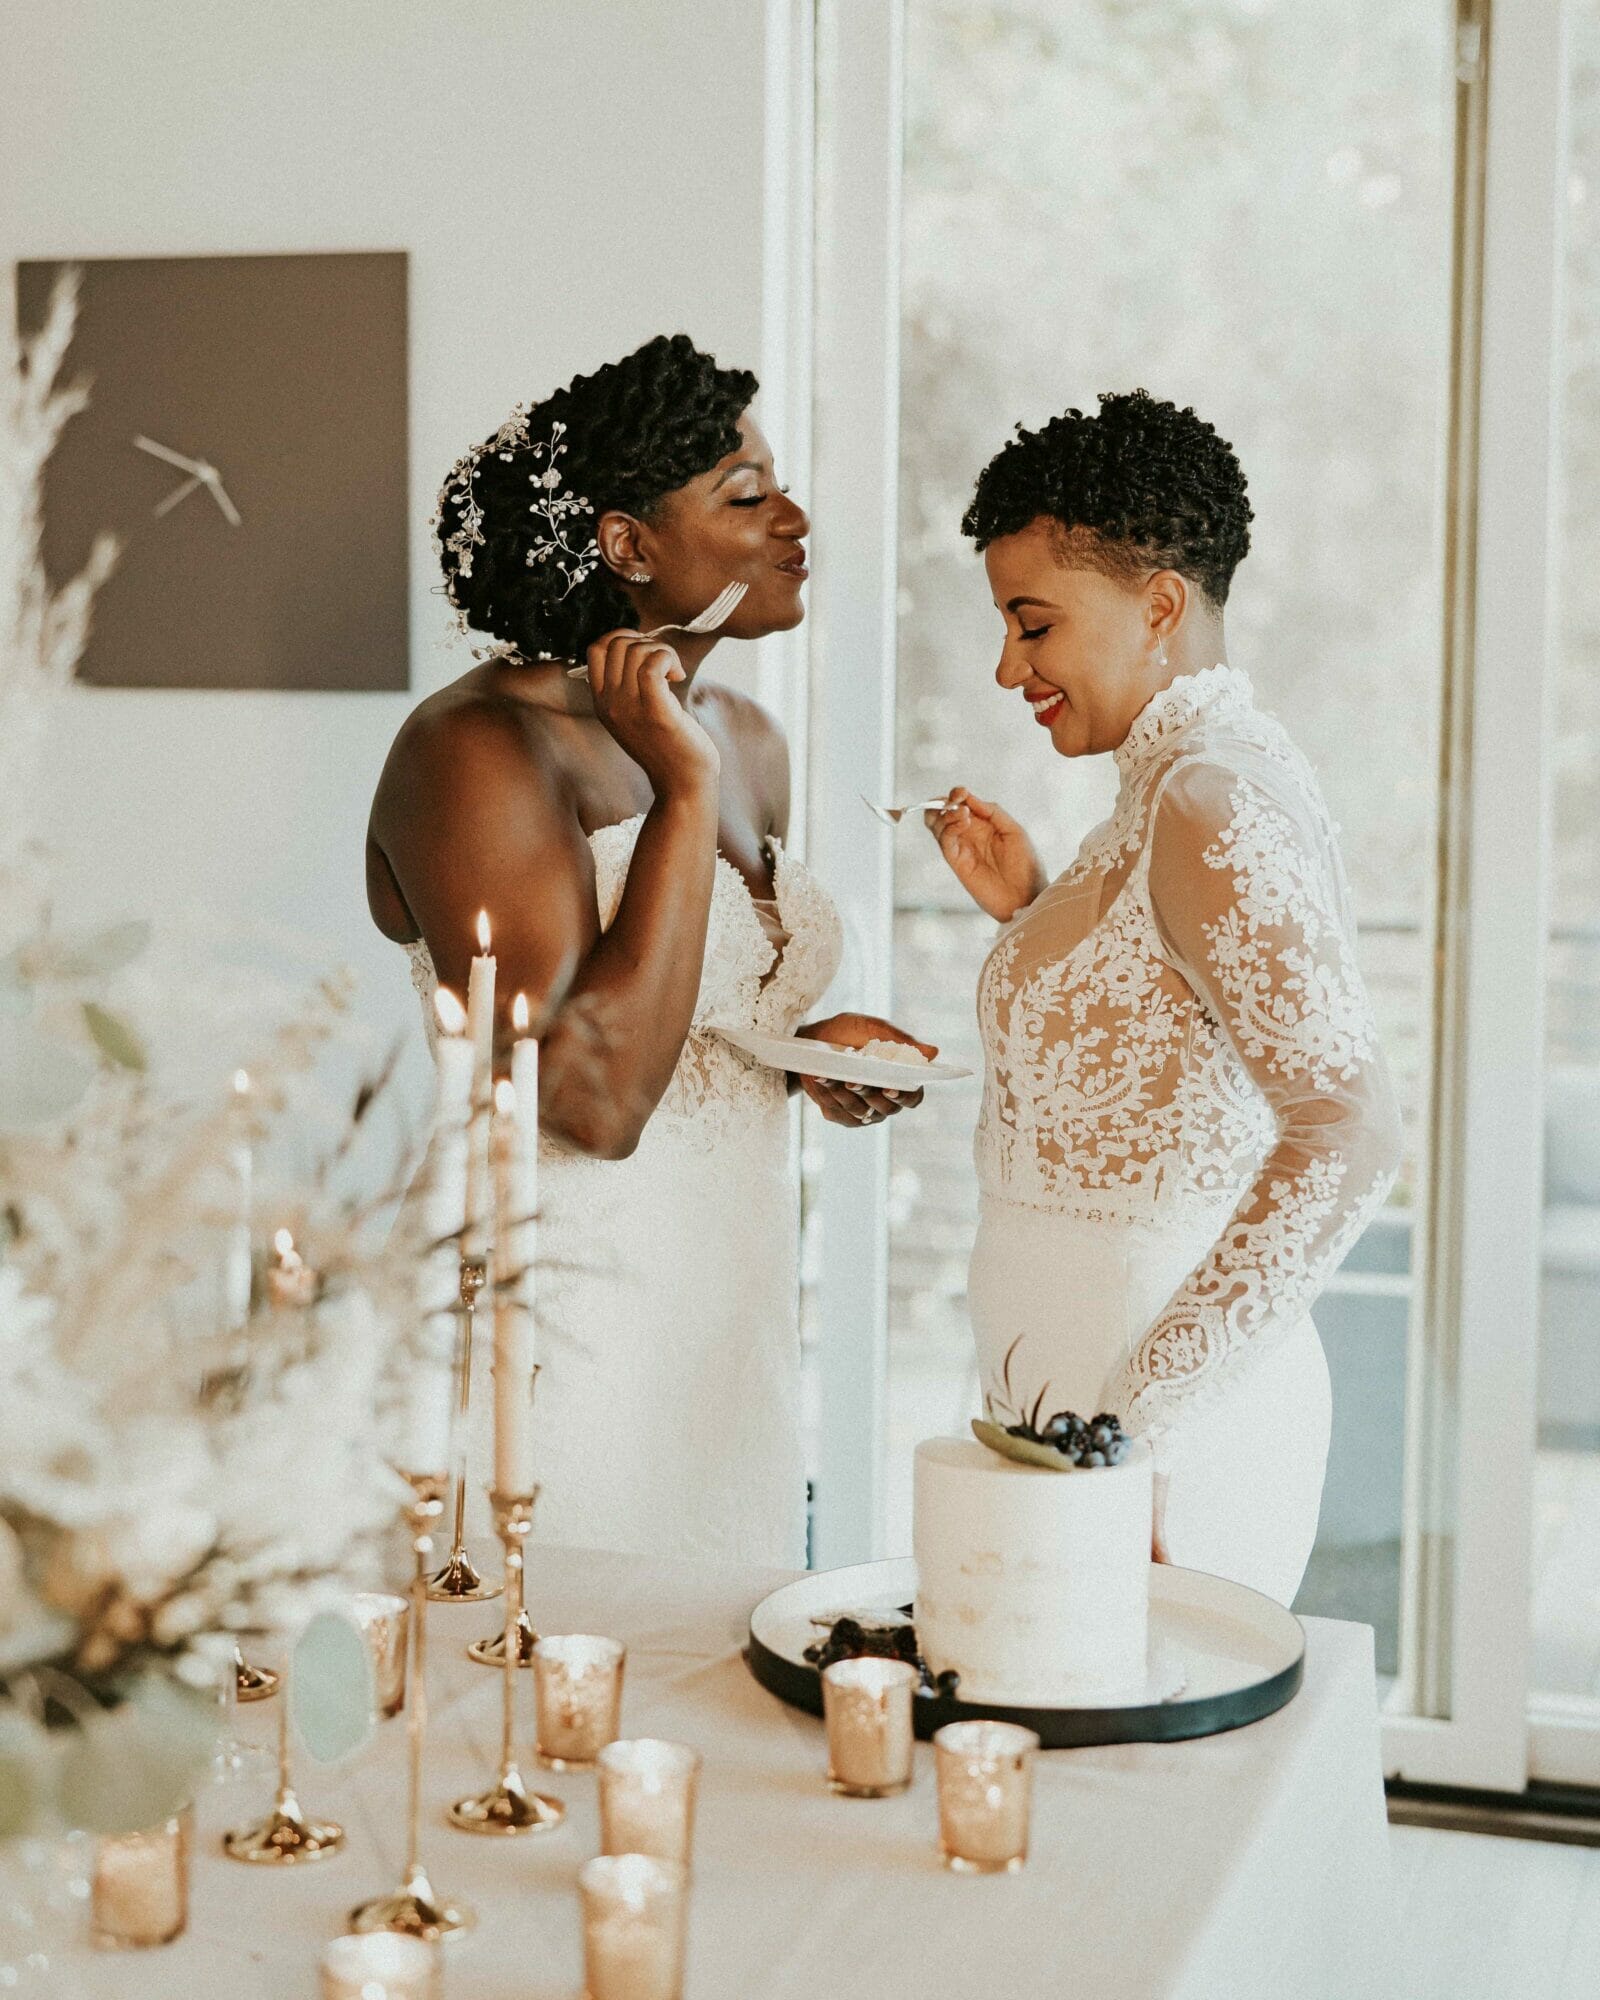 Adrienne Michelle and Brittany Glover wedding cake